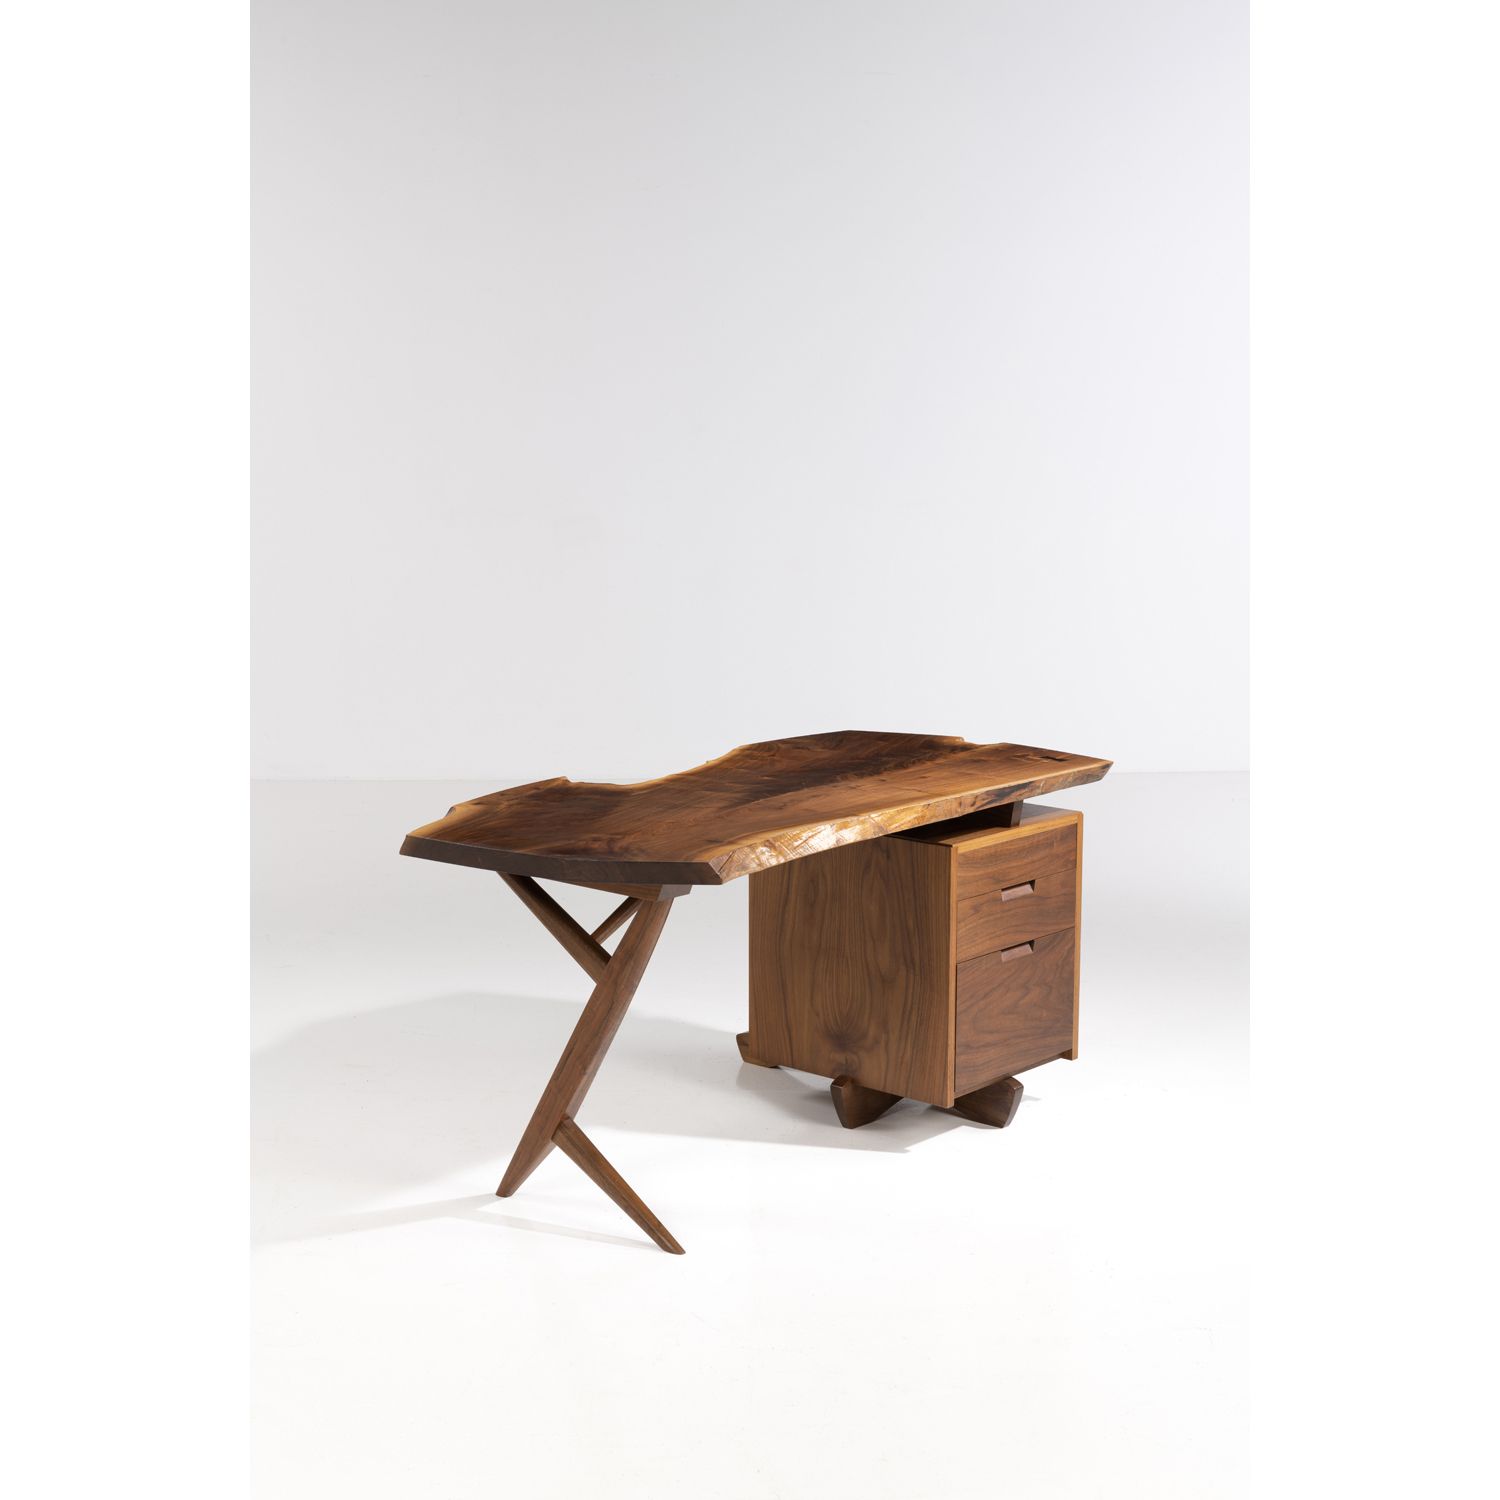 Null 中岛乔治 (1905-1990)

圆锥体办公桌

办公桌

胡桃木

顶部热刻 "中岛 "和 "SAKURA MADE IN JAPAN"。

樱花&hellip;